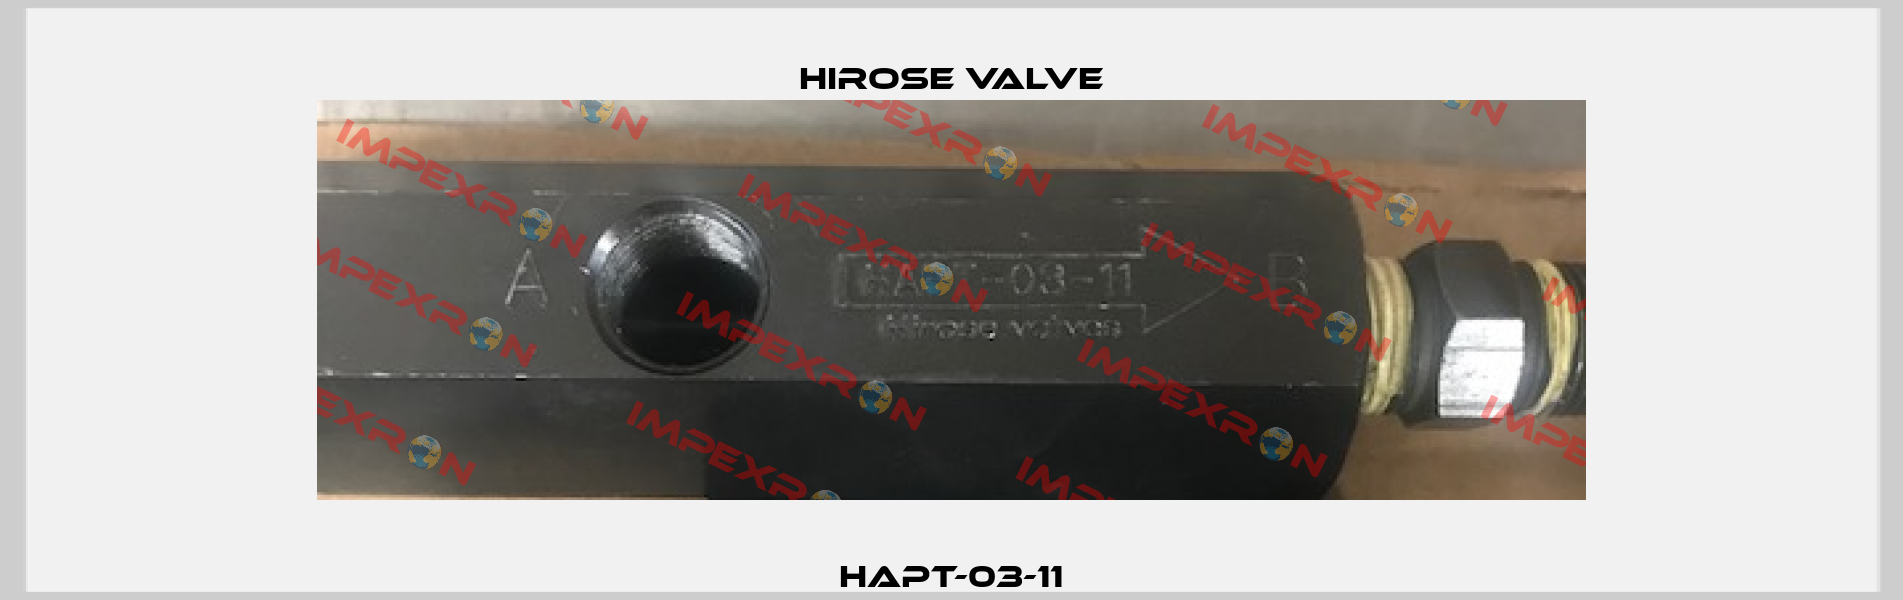 HAPT-03-11 Hirose Valve